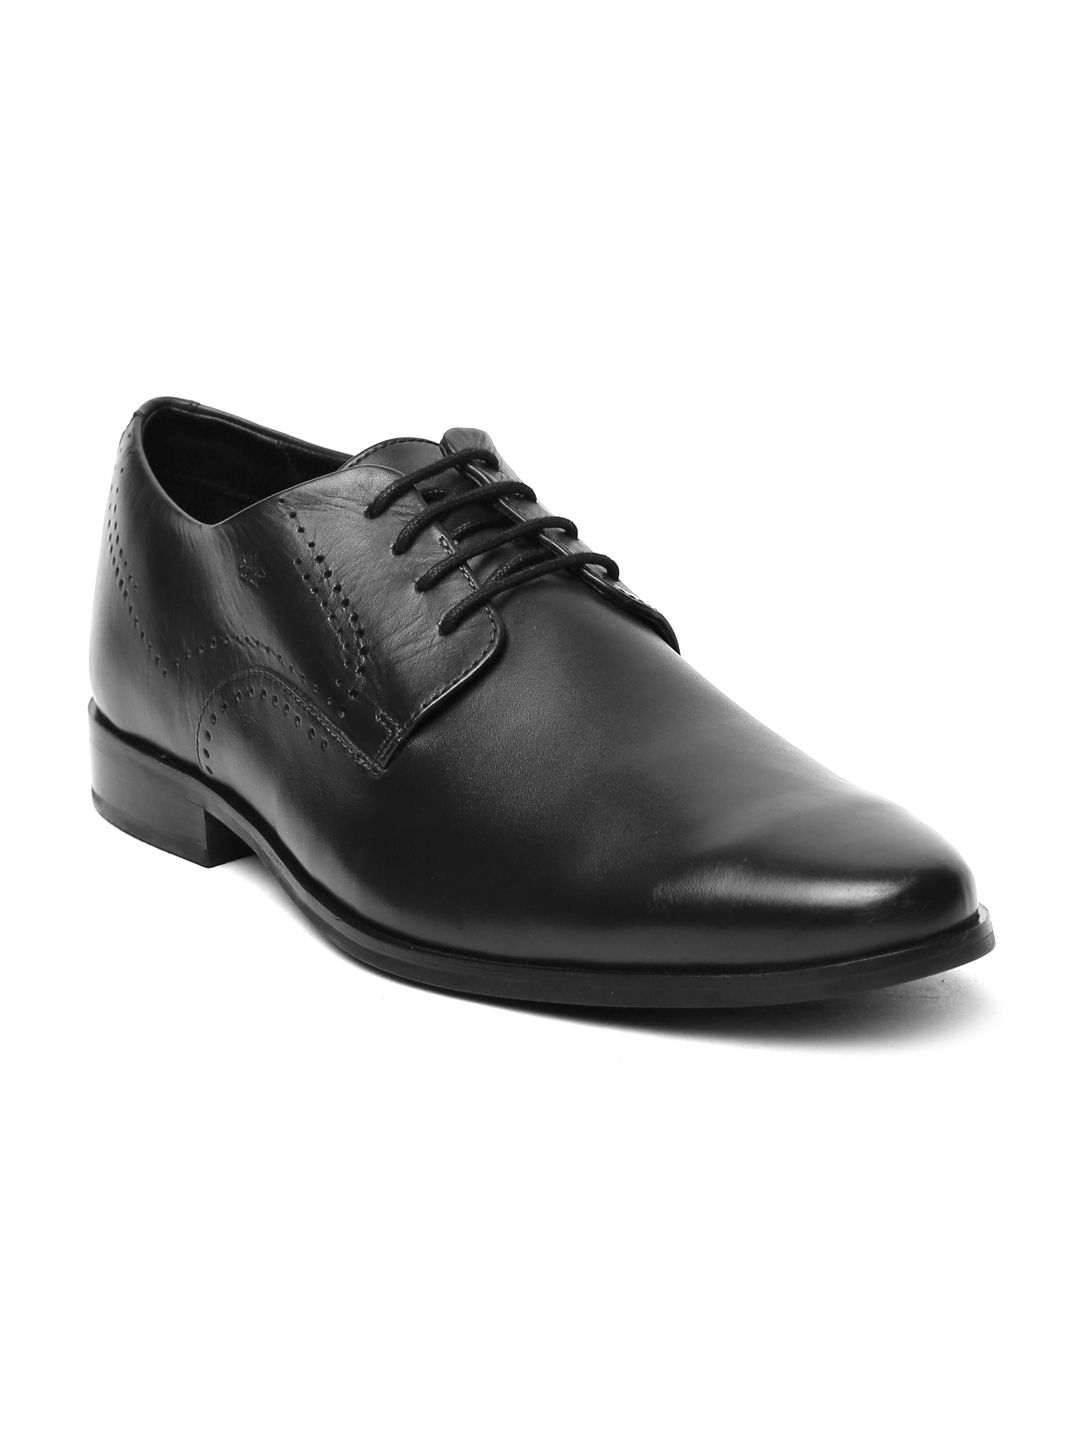 Buy Arrow Men Black Max Leather Derby Shoes - Formal Shoes for Men ...